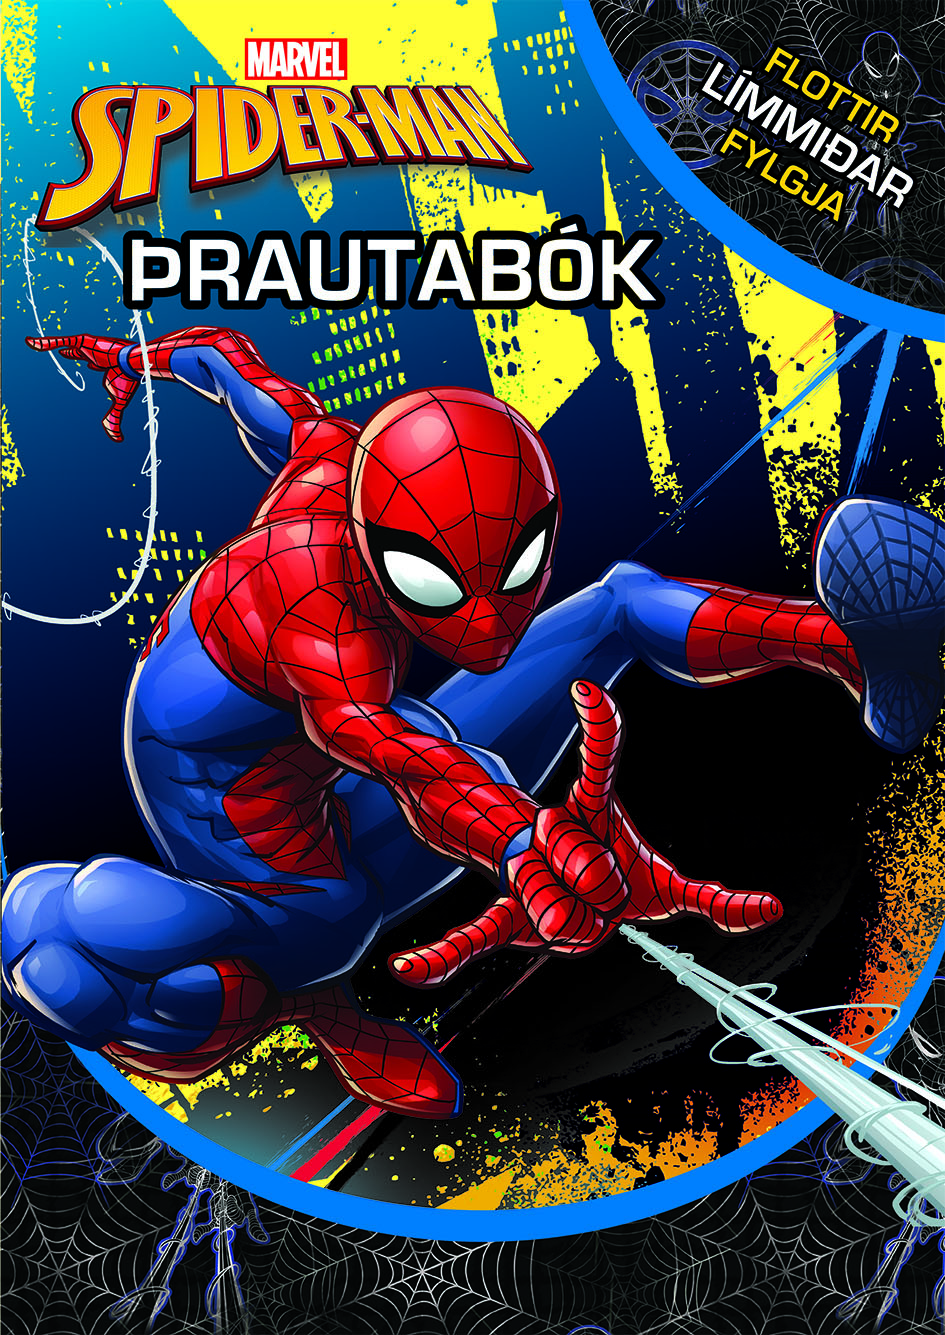 Spiderman_þrautabo_k